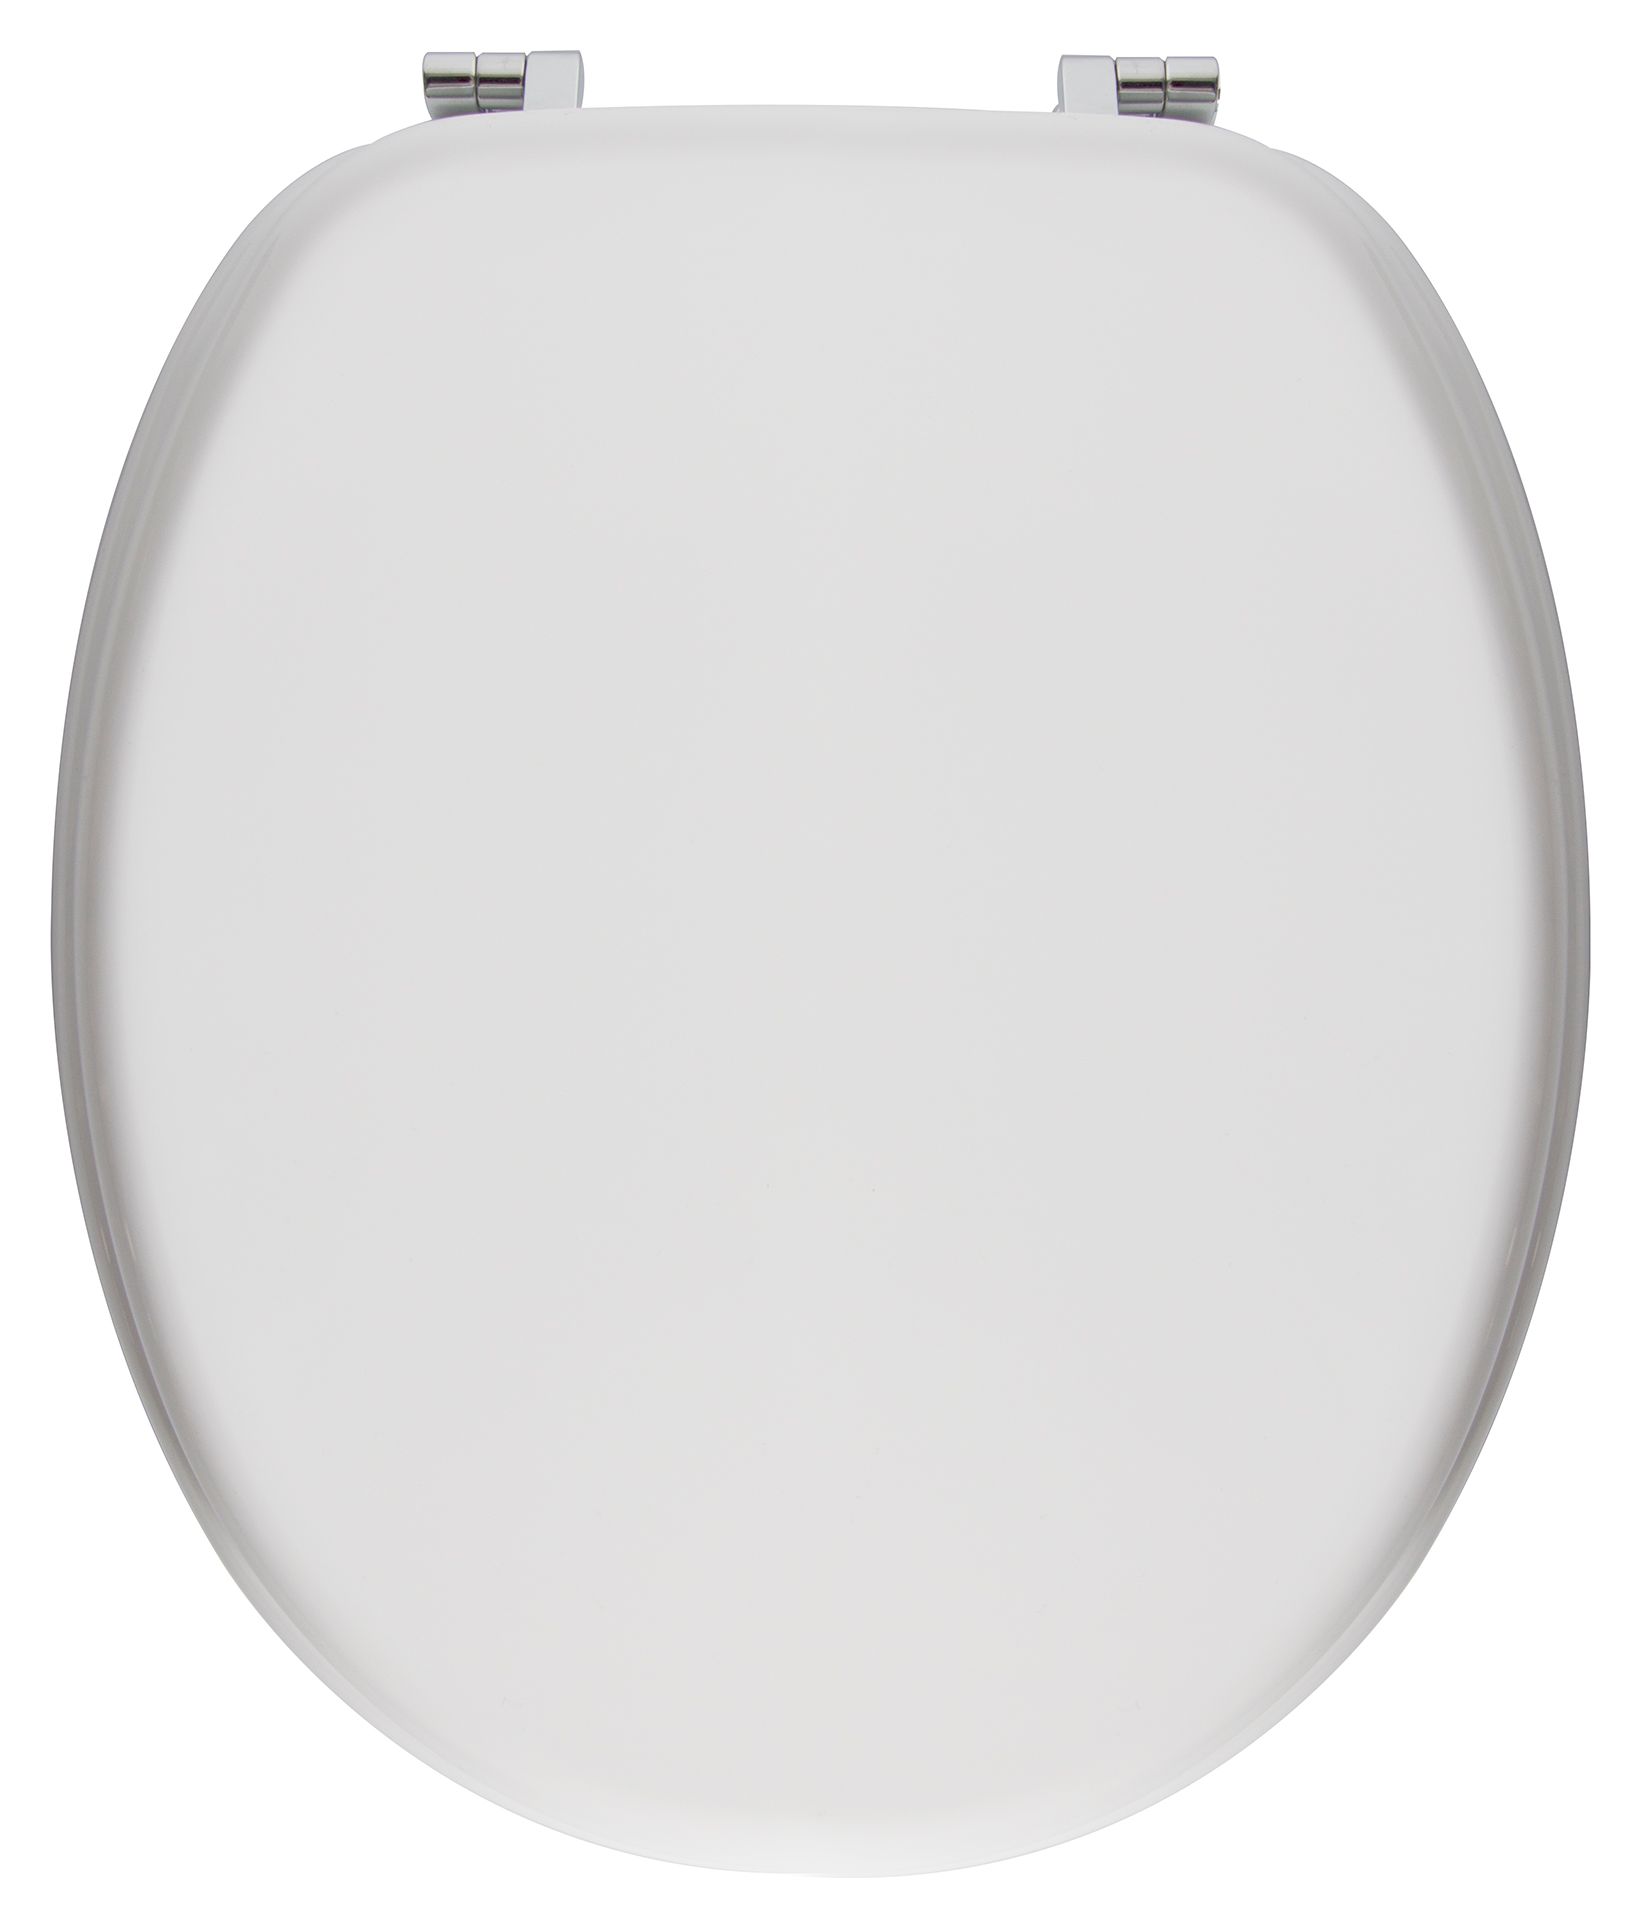 Wickes Wooden Standard Close Toilet Seat - White